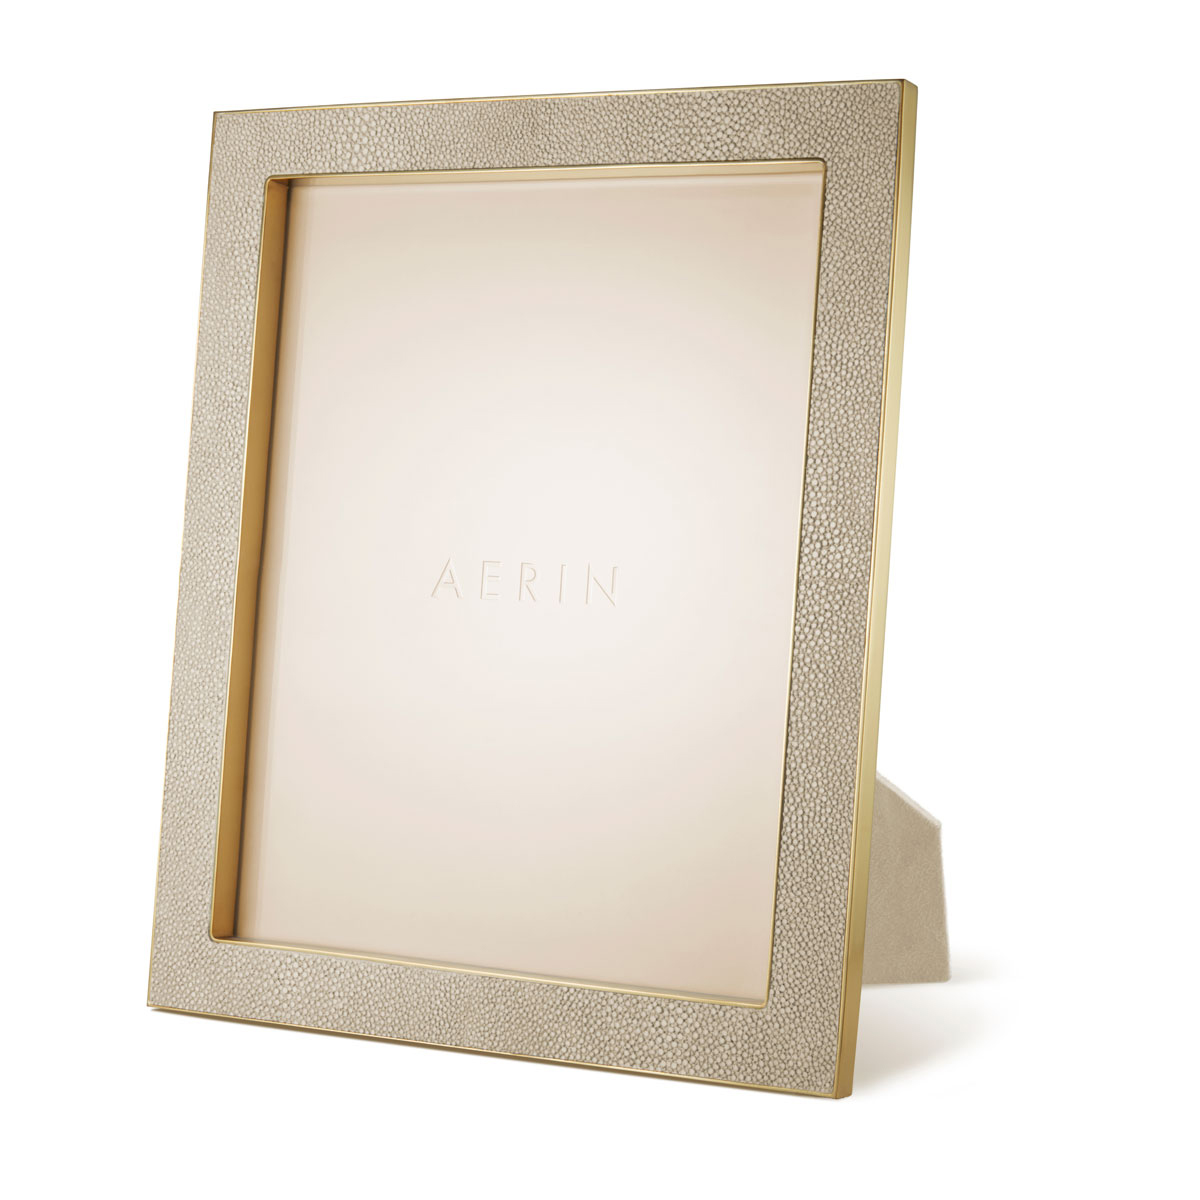 Aerin Classic Shagreen Frame, Wheat 8x10"